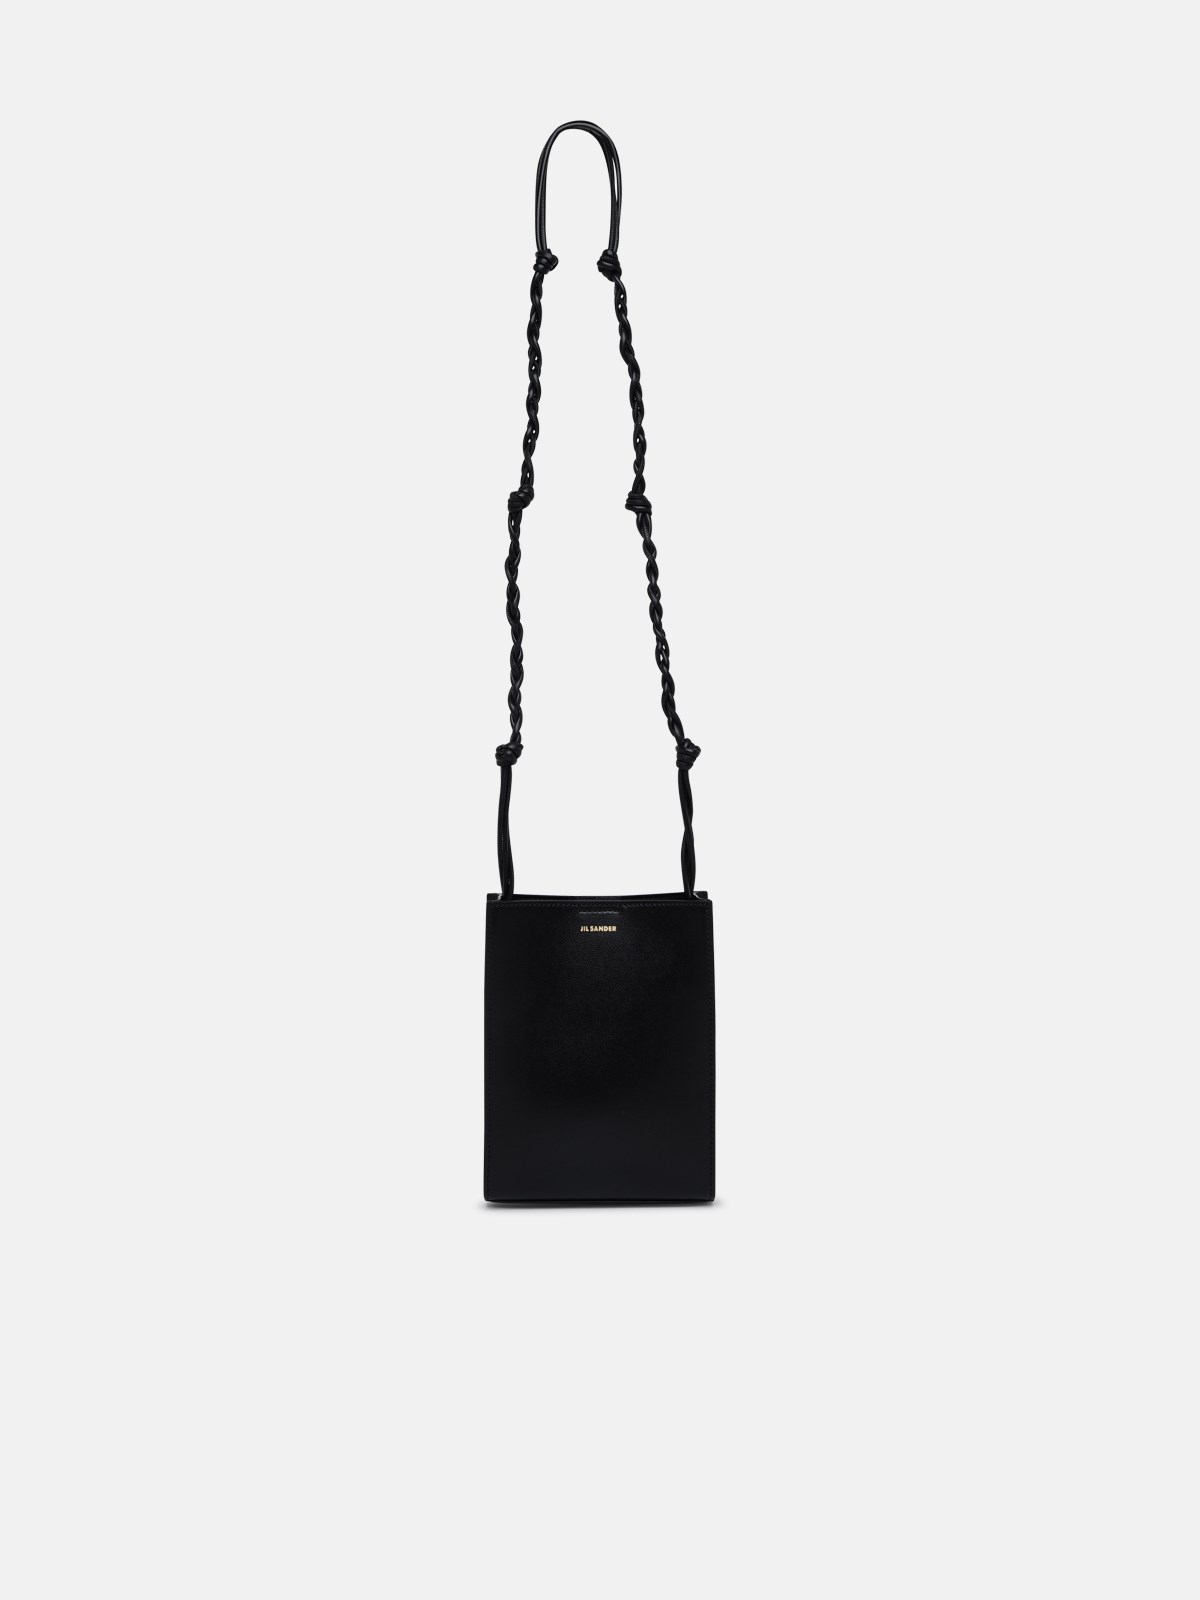 Jil Sander Black Leather Small Tangle Crossbody Bag